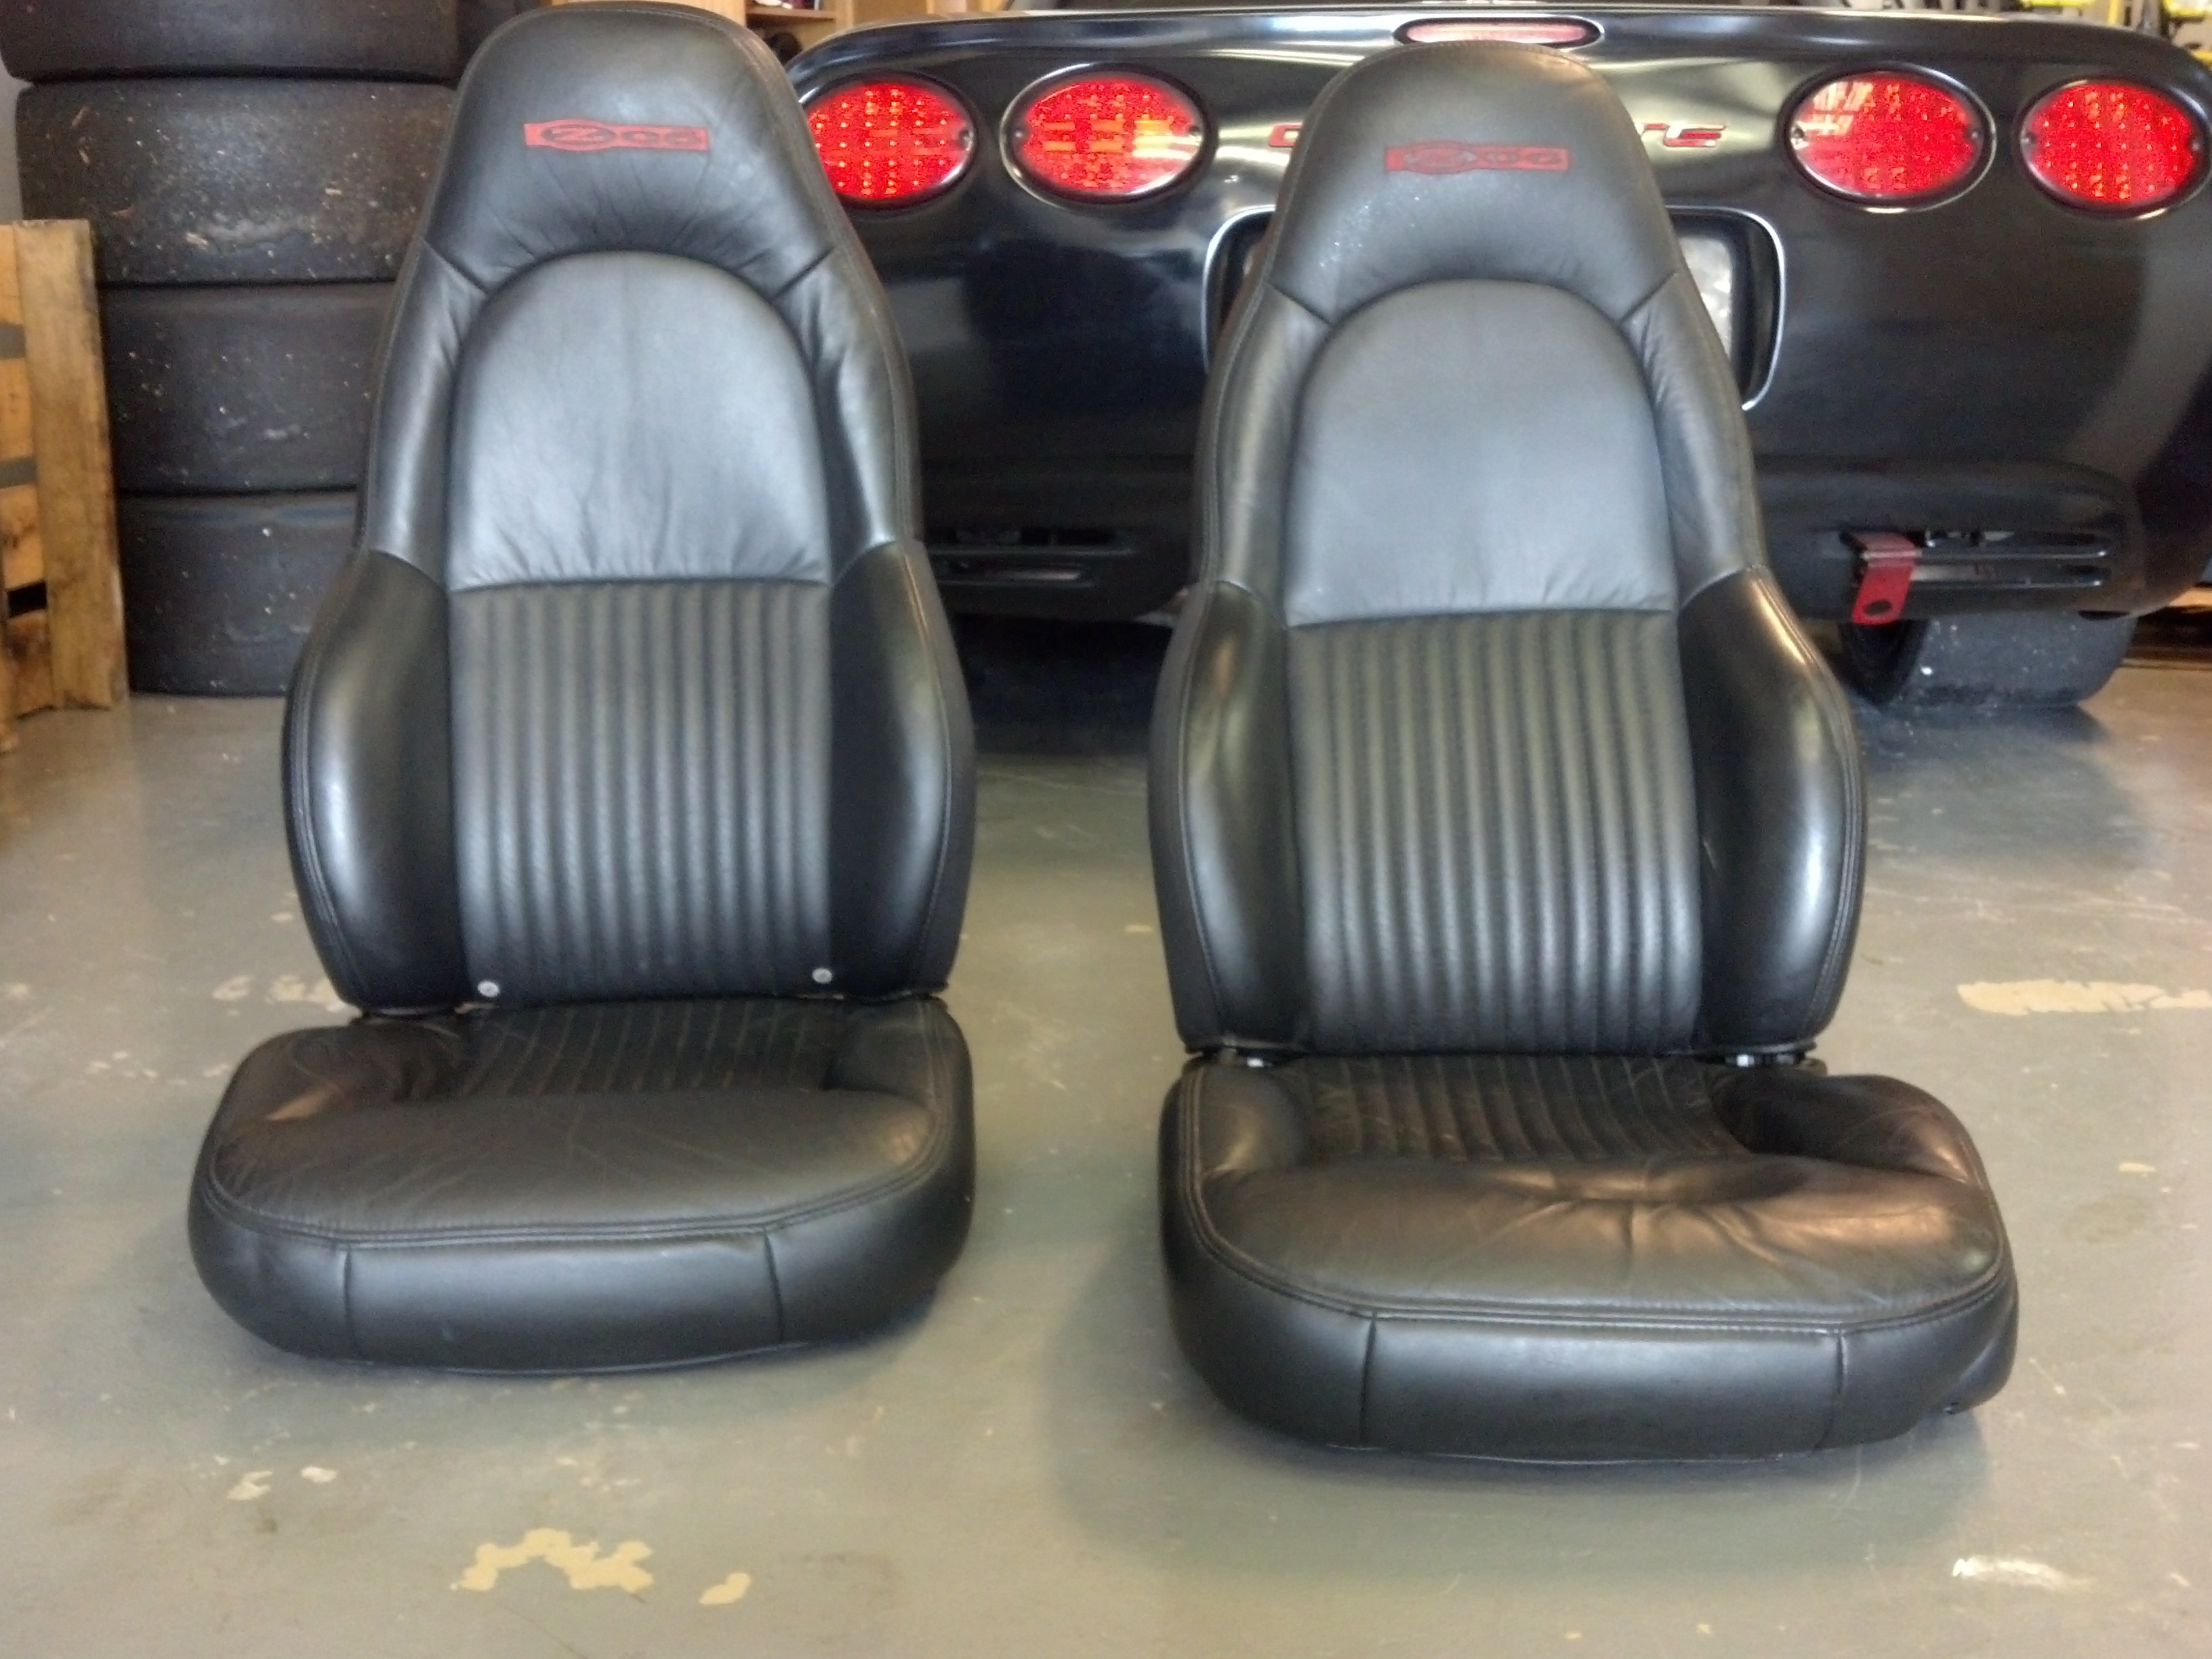 Original C5 Z06 seats for sale $100 - CorvetteForum - Chevrolet Corvette  Forum Discussion